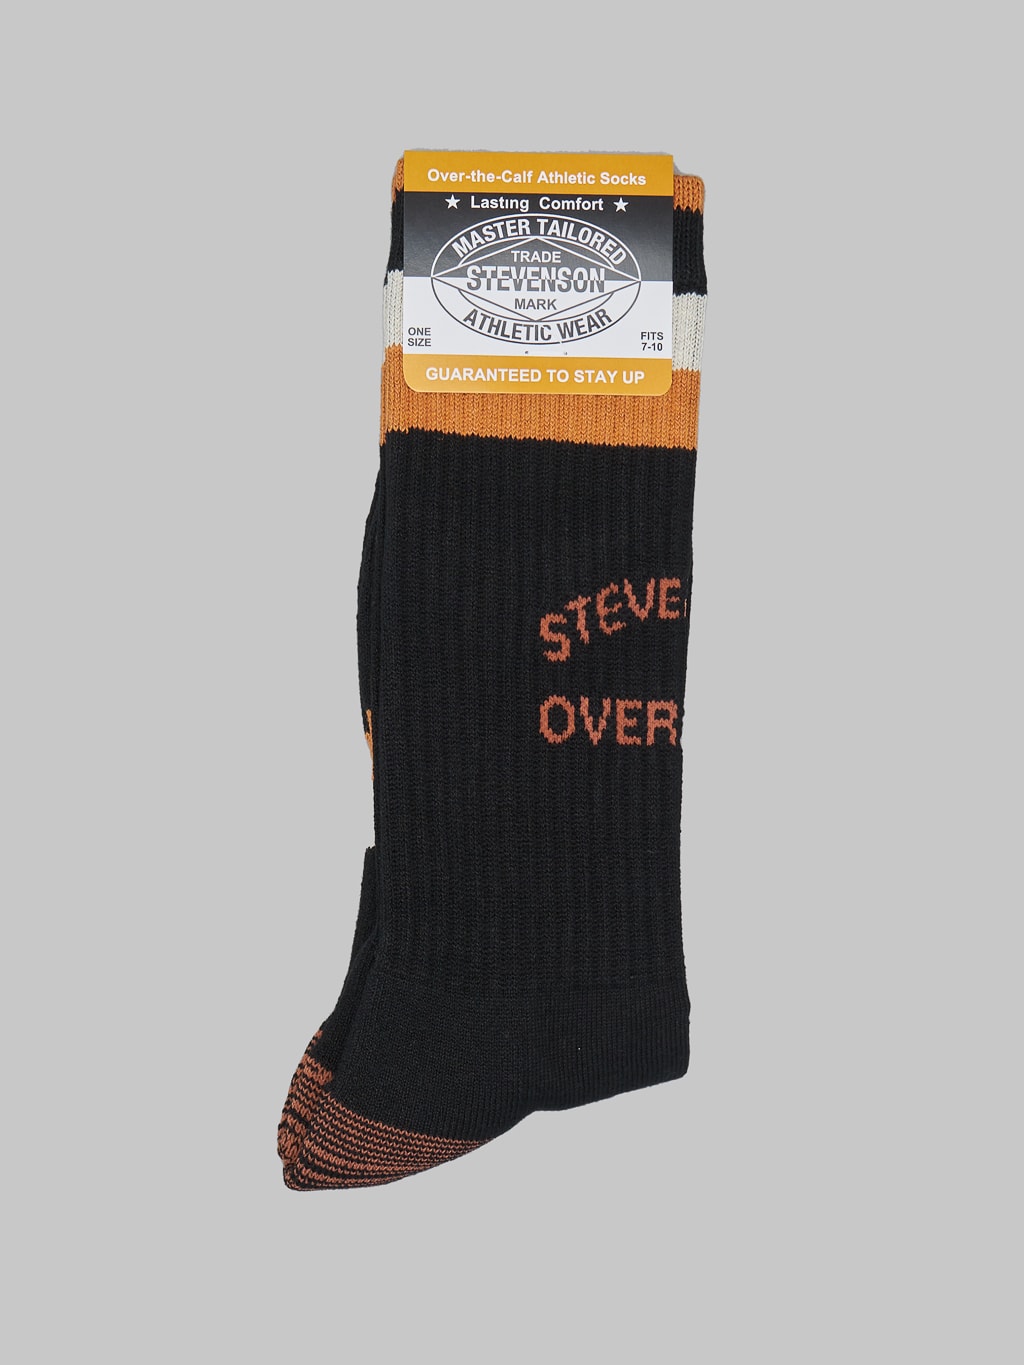 Stevenson Overall Athletic Socks black comfortable cotton